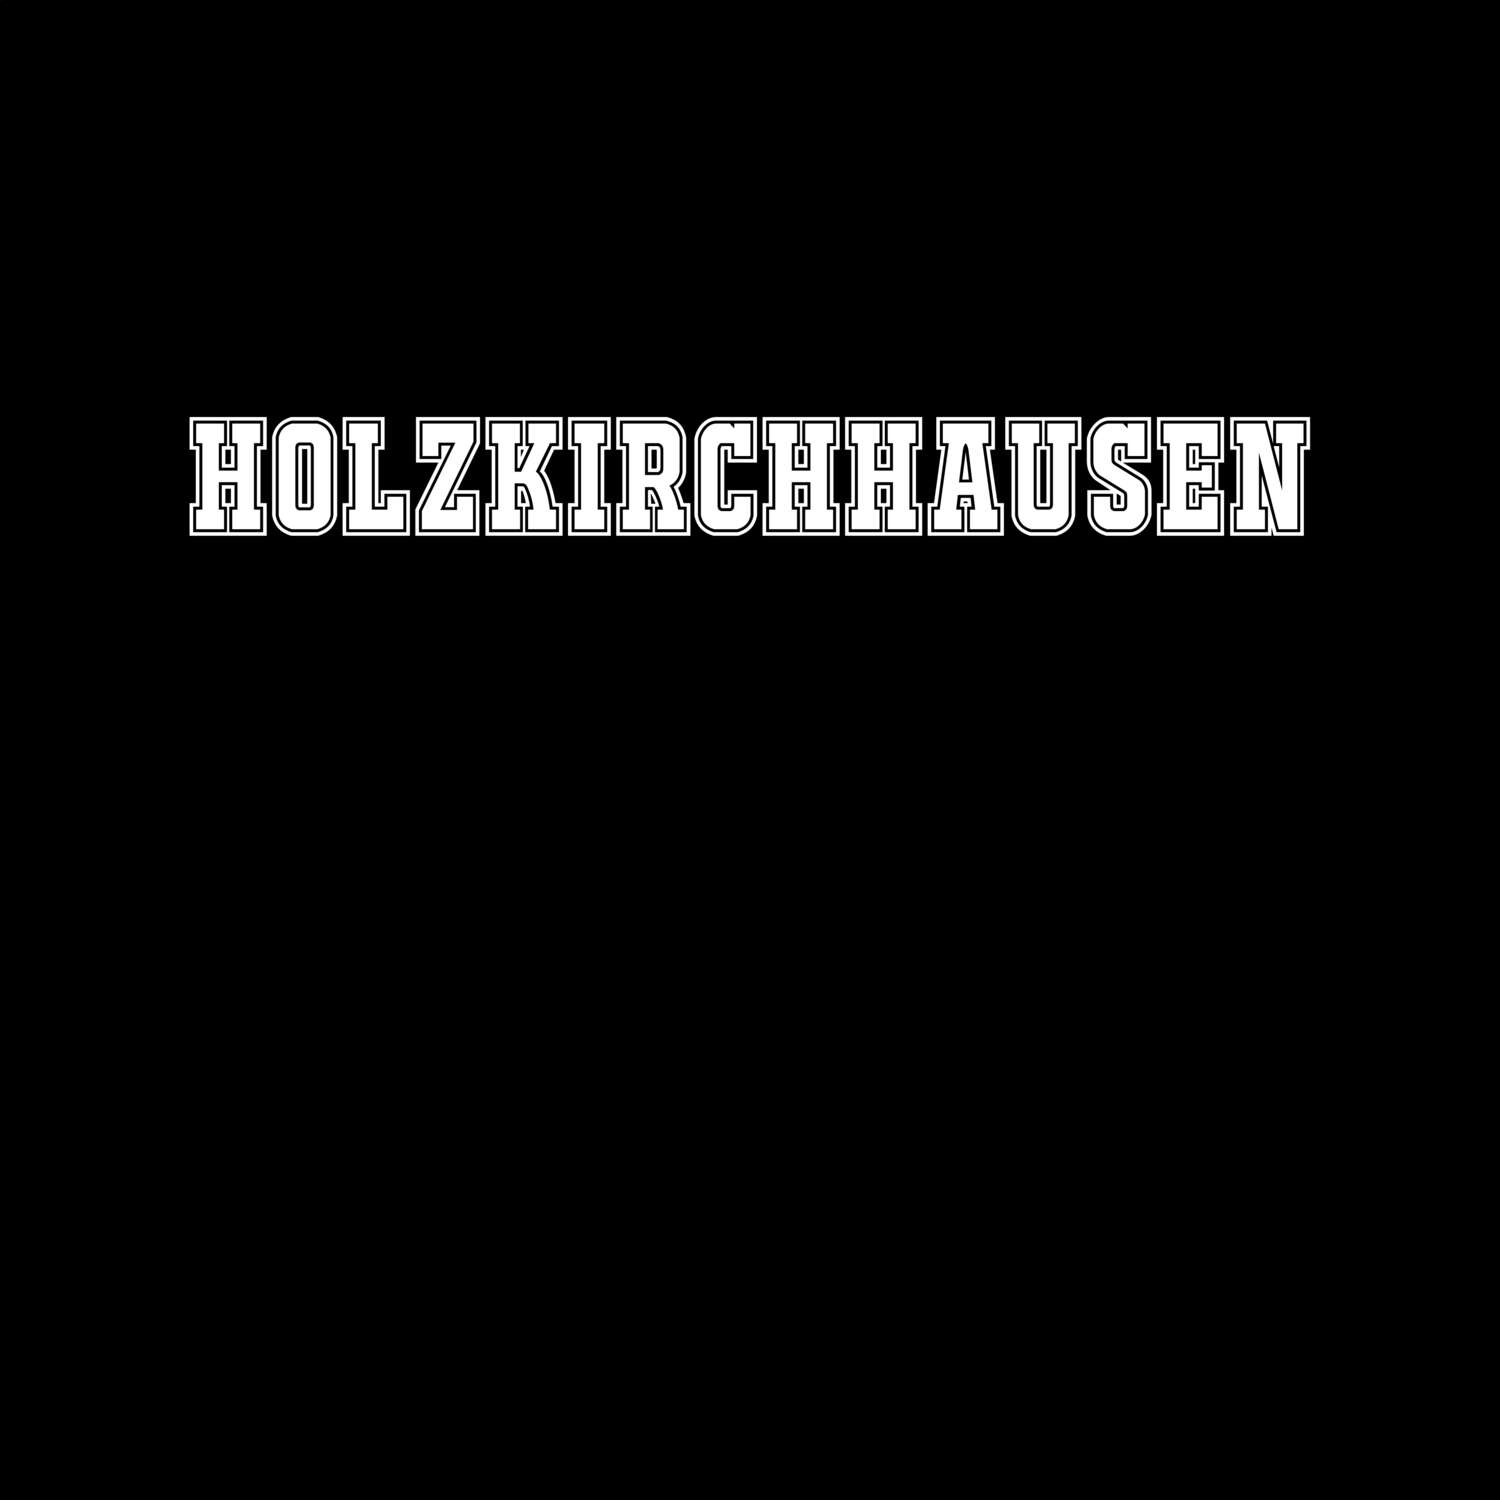 Holzkirchhausen T-Shirt »Classic«